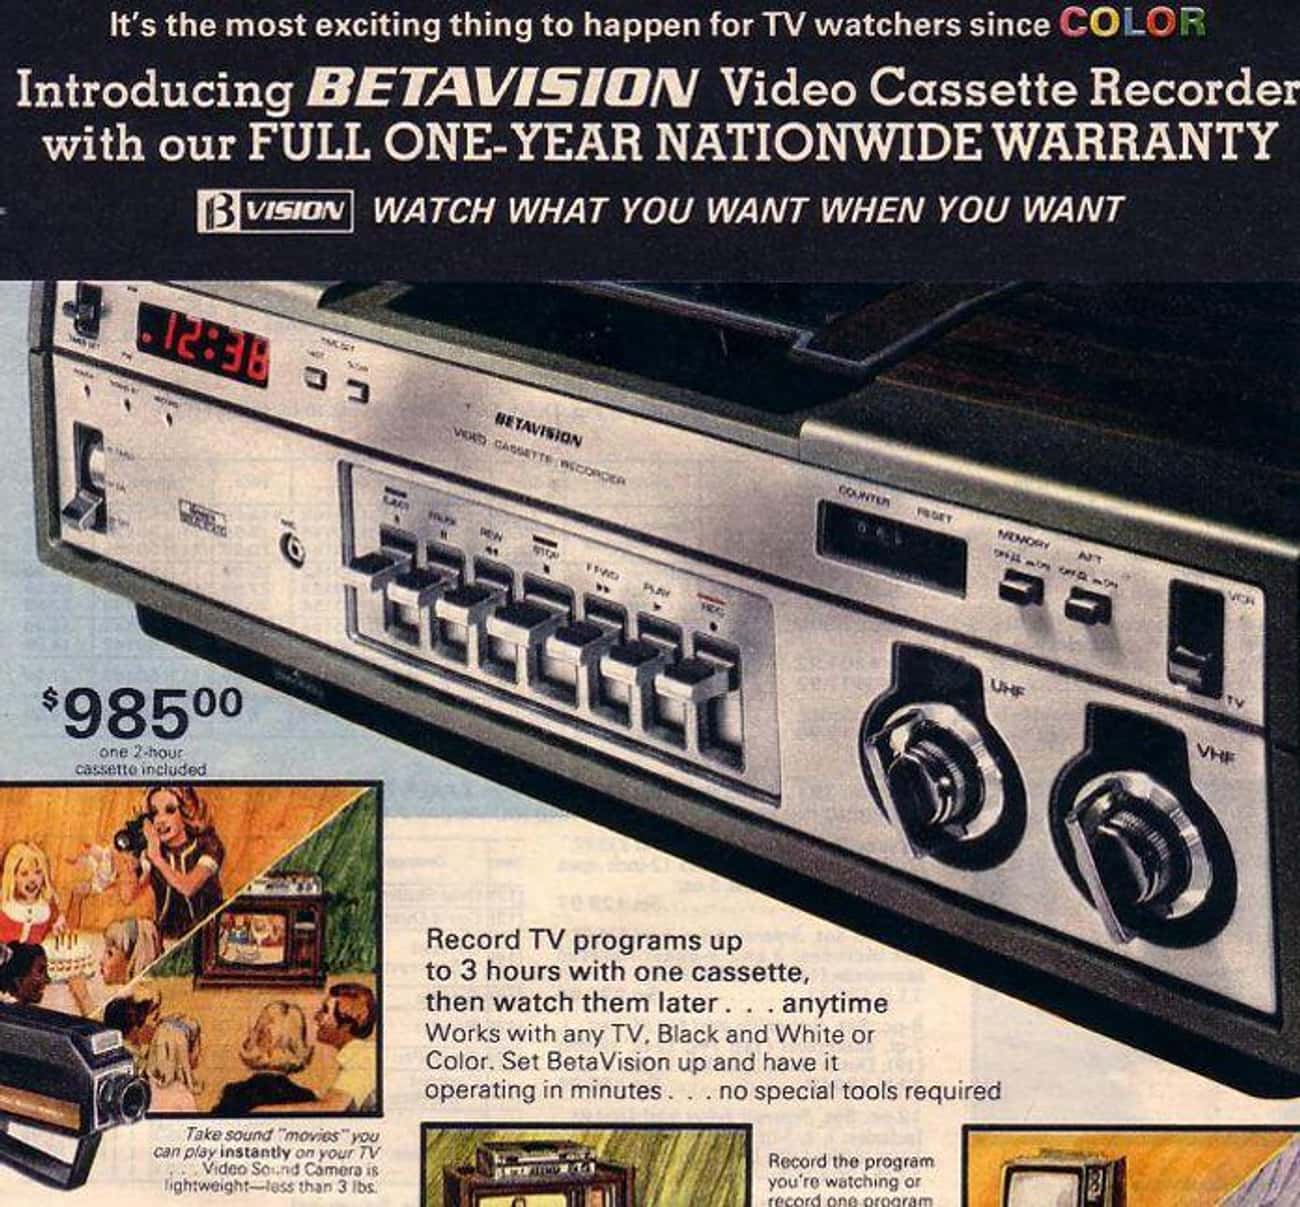 BetaVision Video Cassette Recorder: $985.00